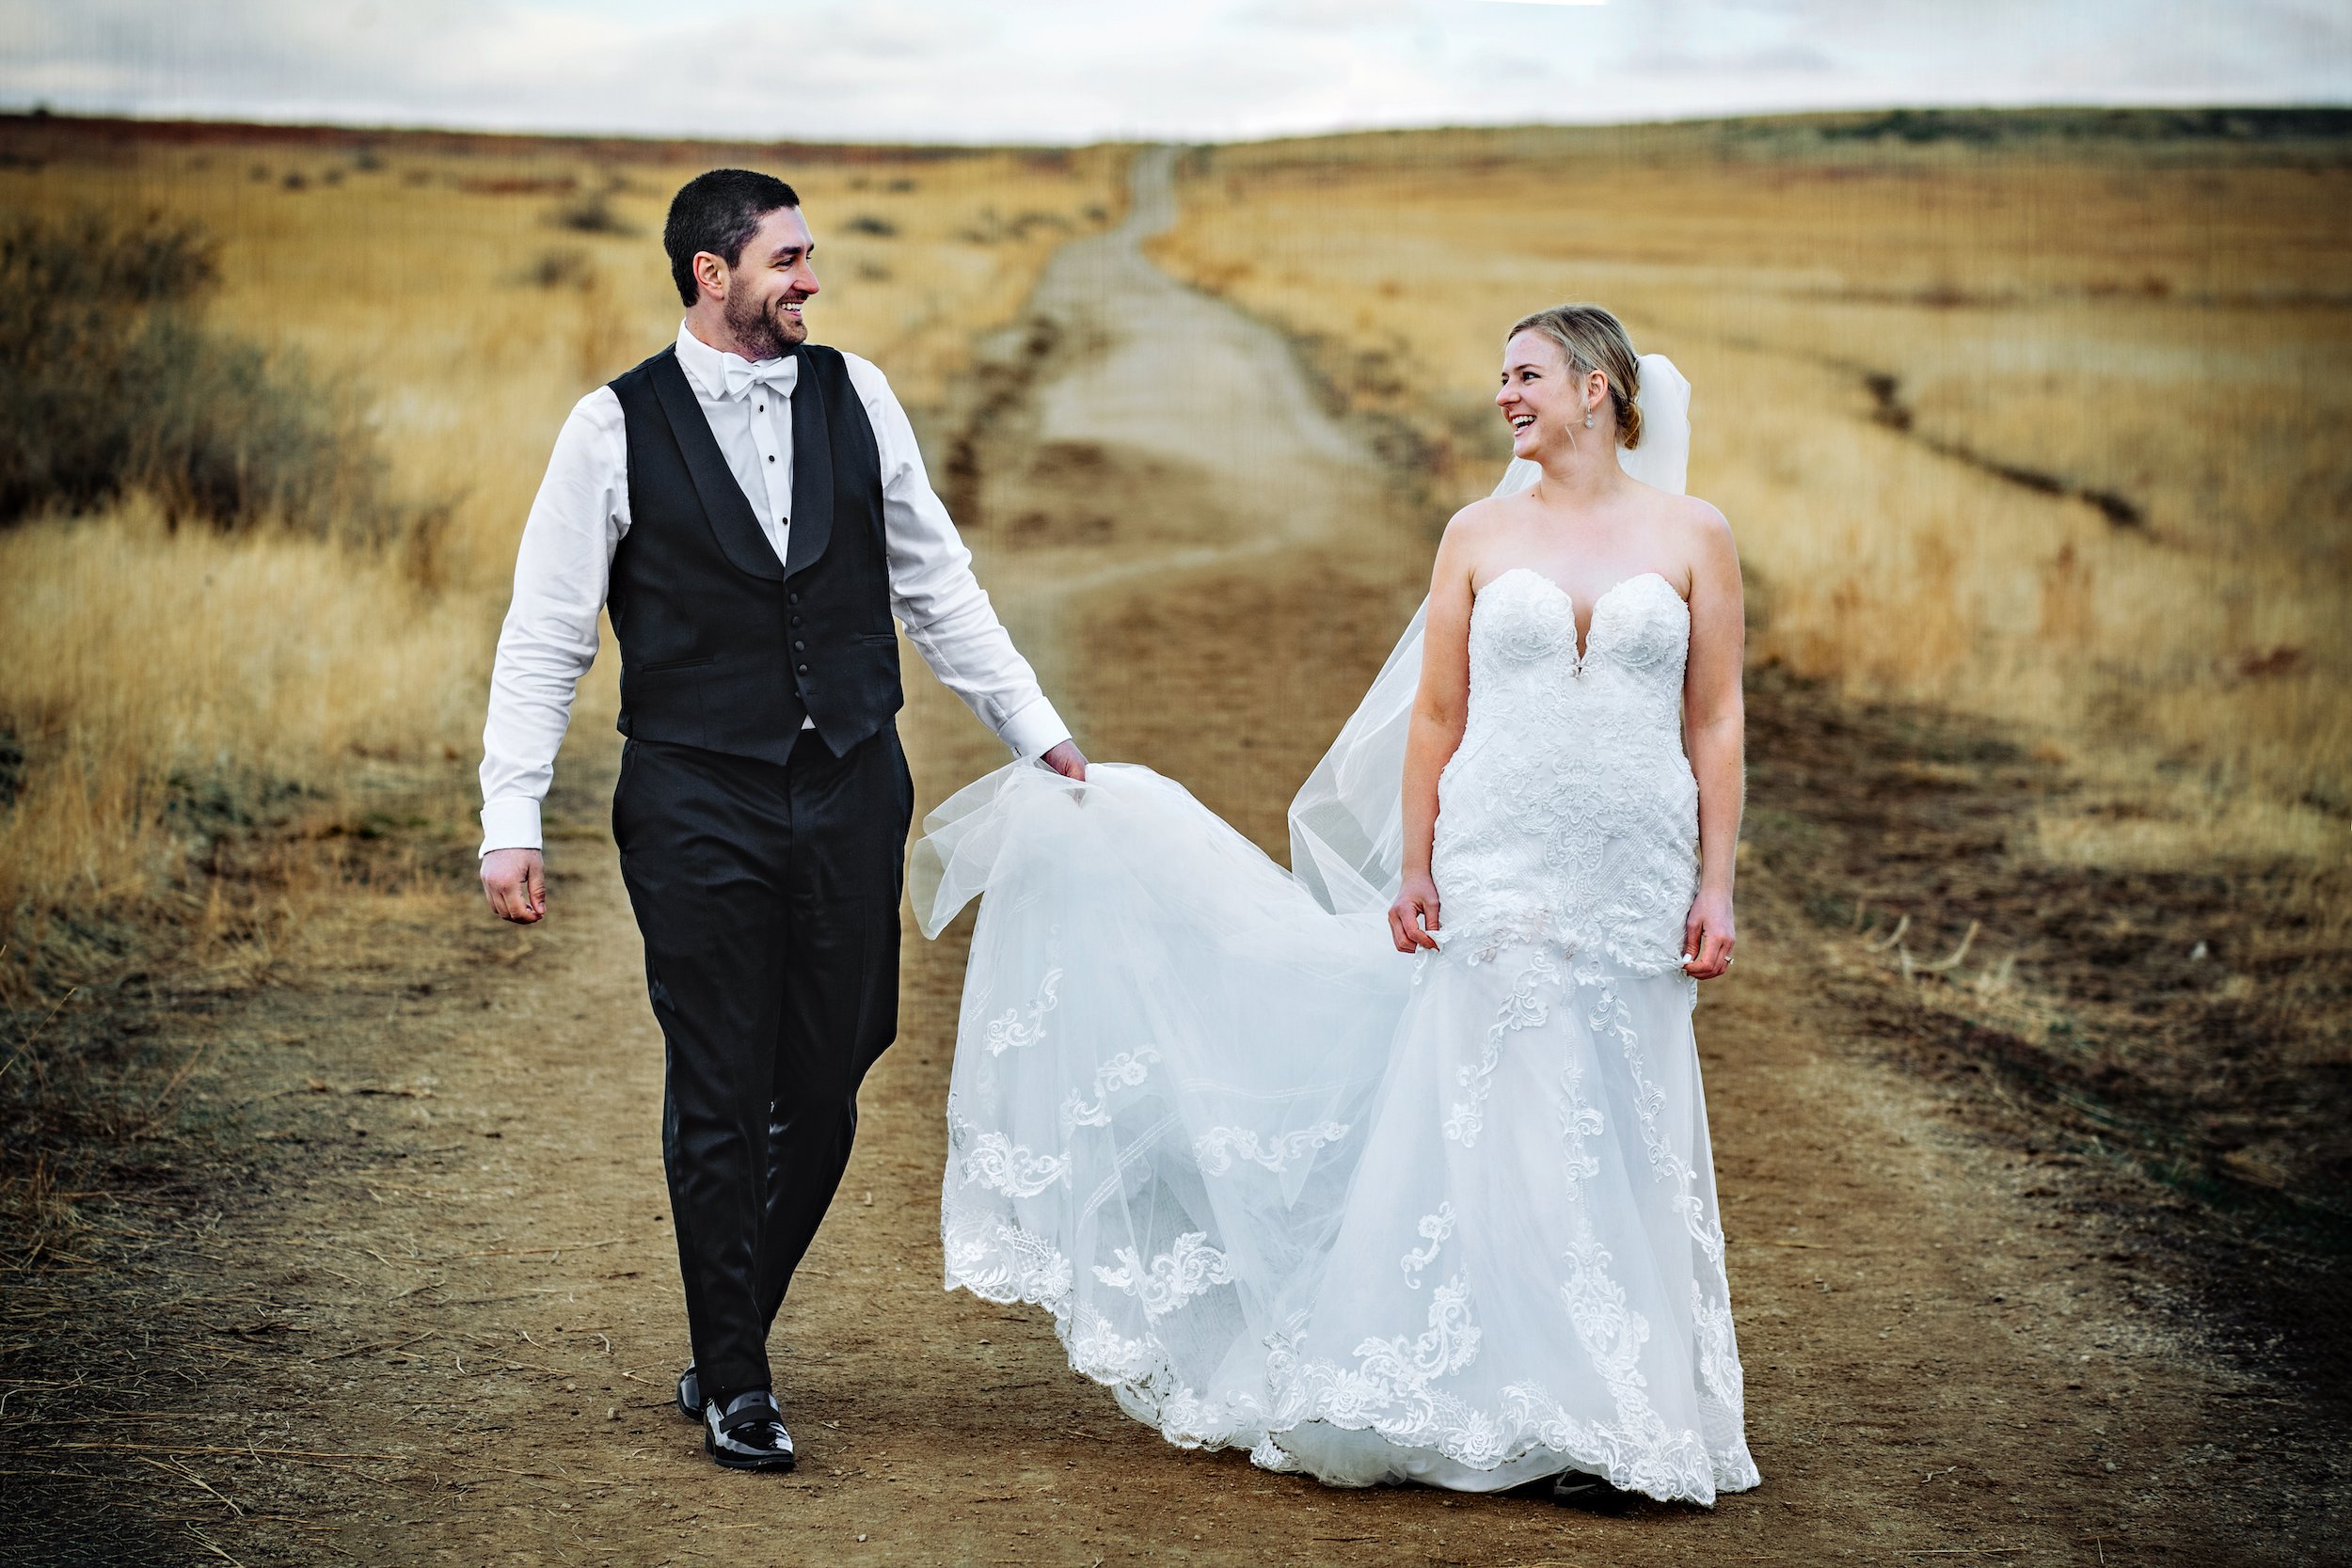 Jeff_Tisman_Wedding_Photography_Hunter_Sydney_Boulder_Colorado_Couple_Walks_on_Dirt_Path.jpg